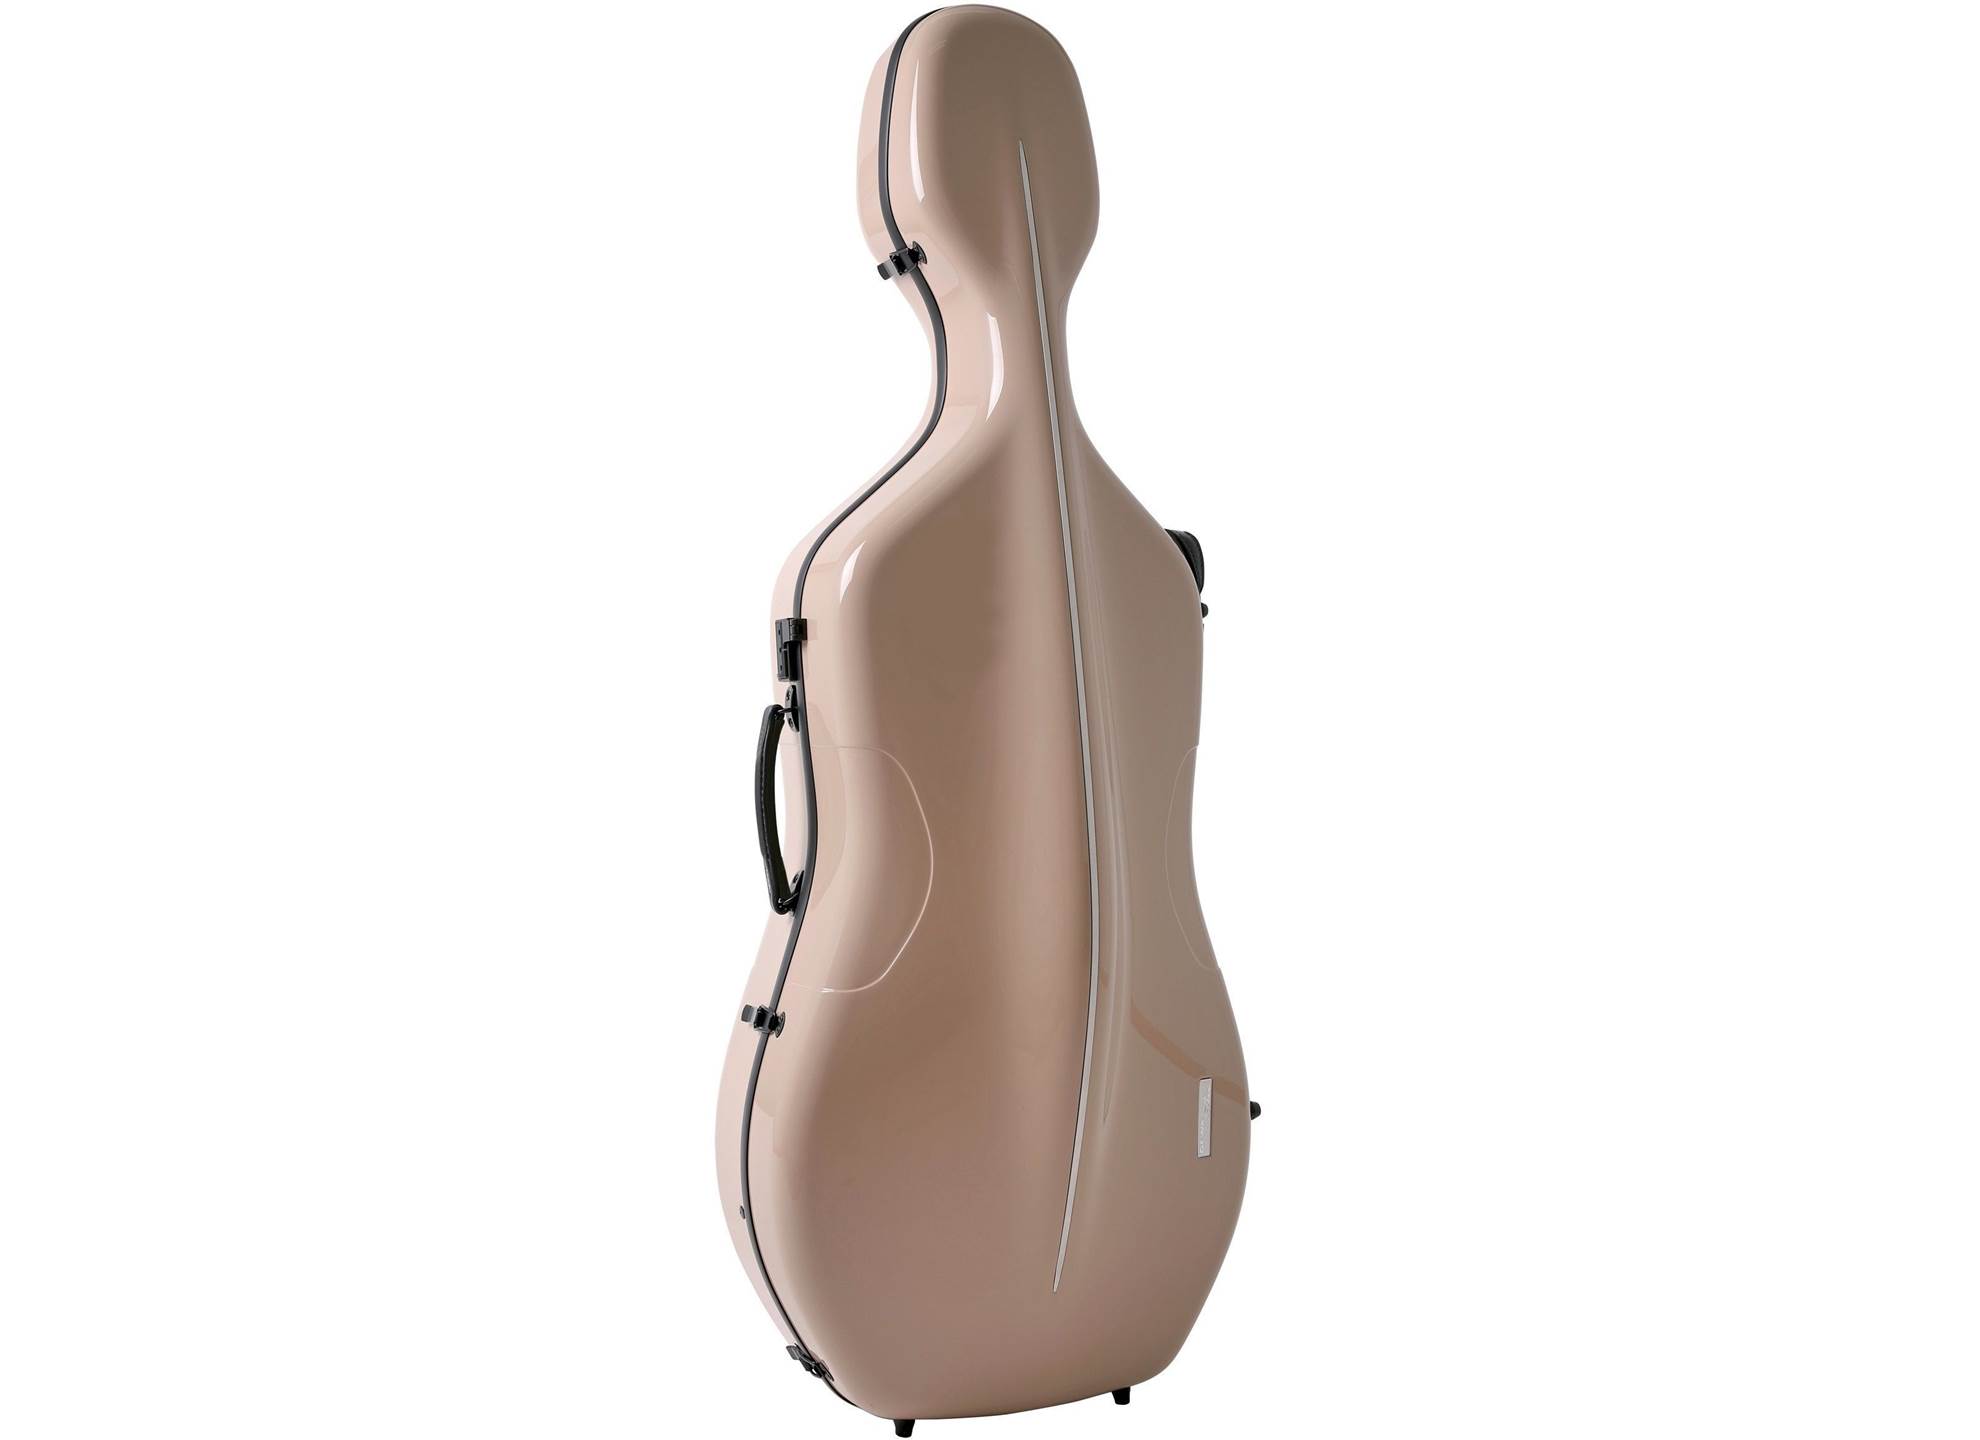 Cello case Air Beige